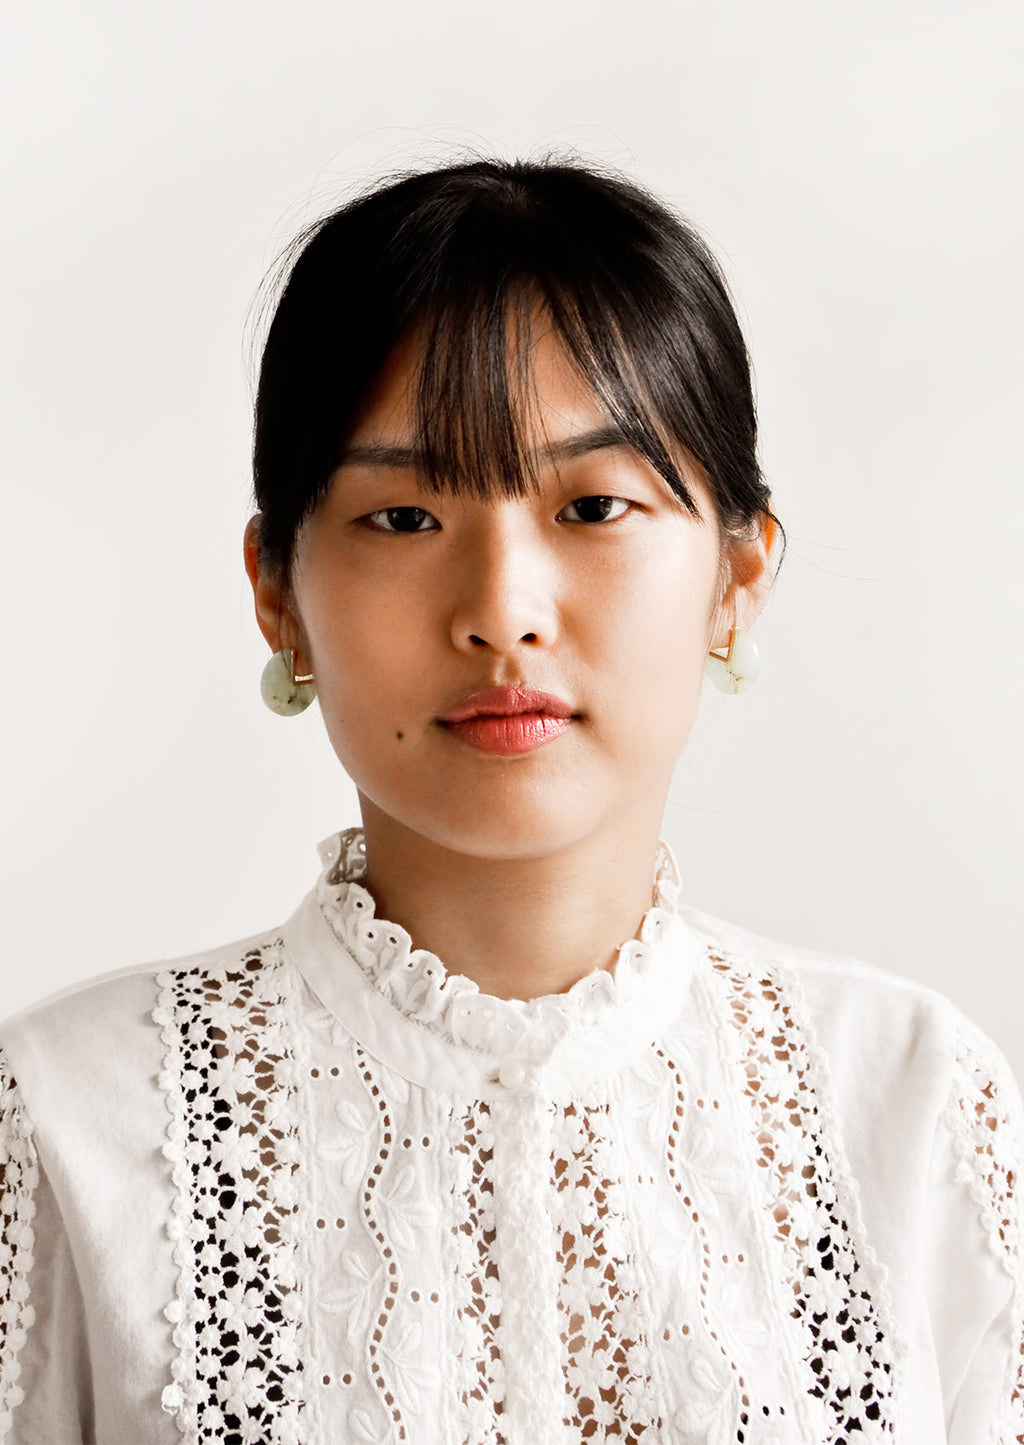 2: Model wears green gemstone earrings and white blouse.